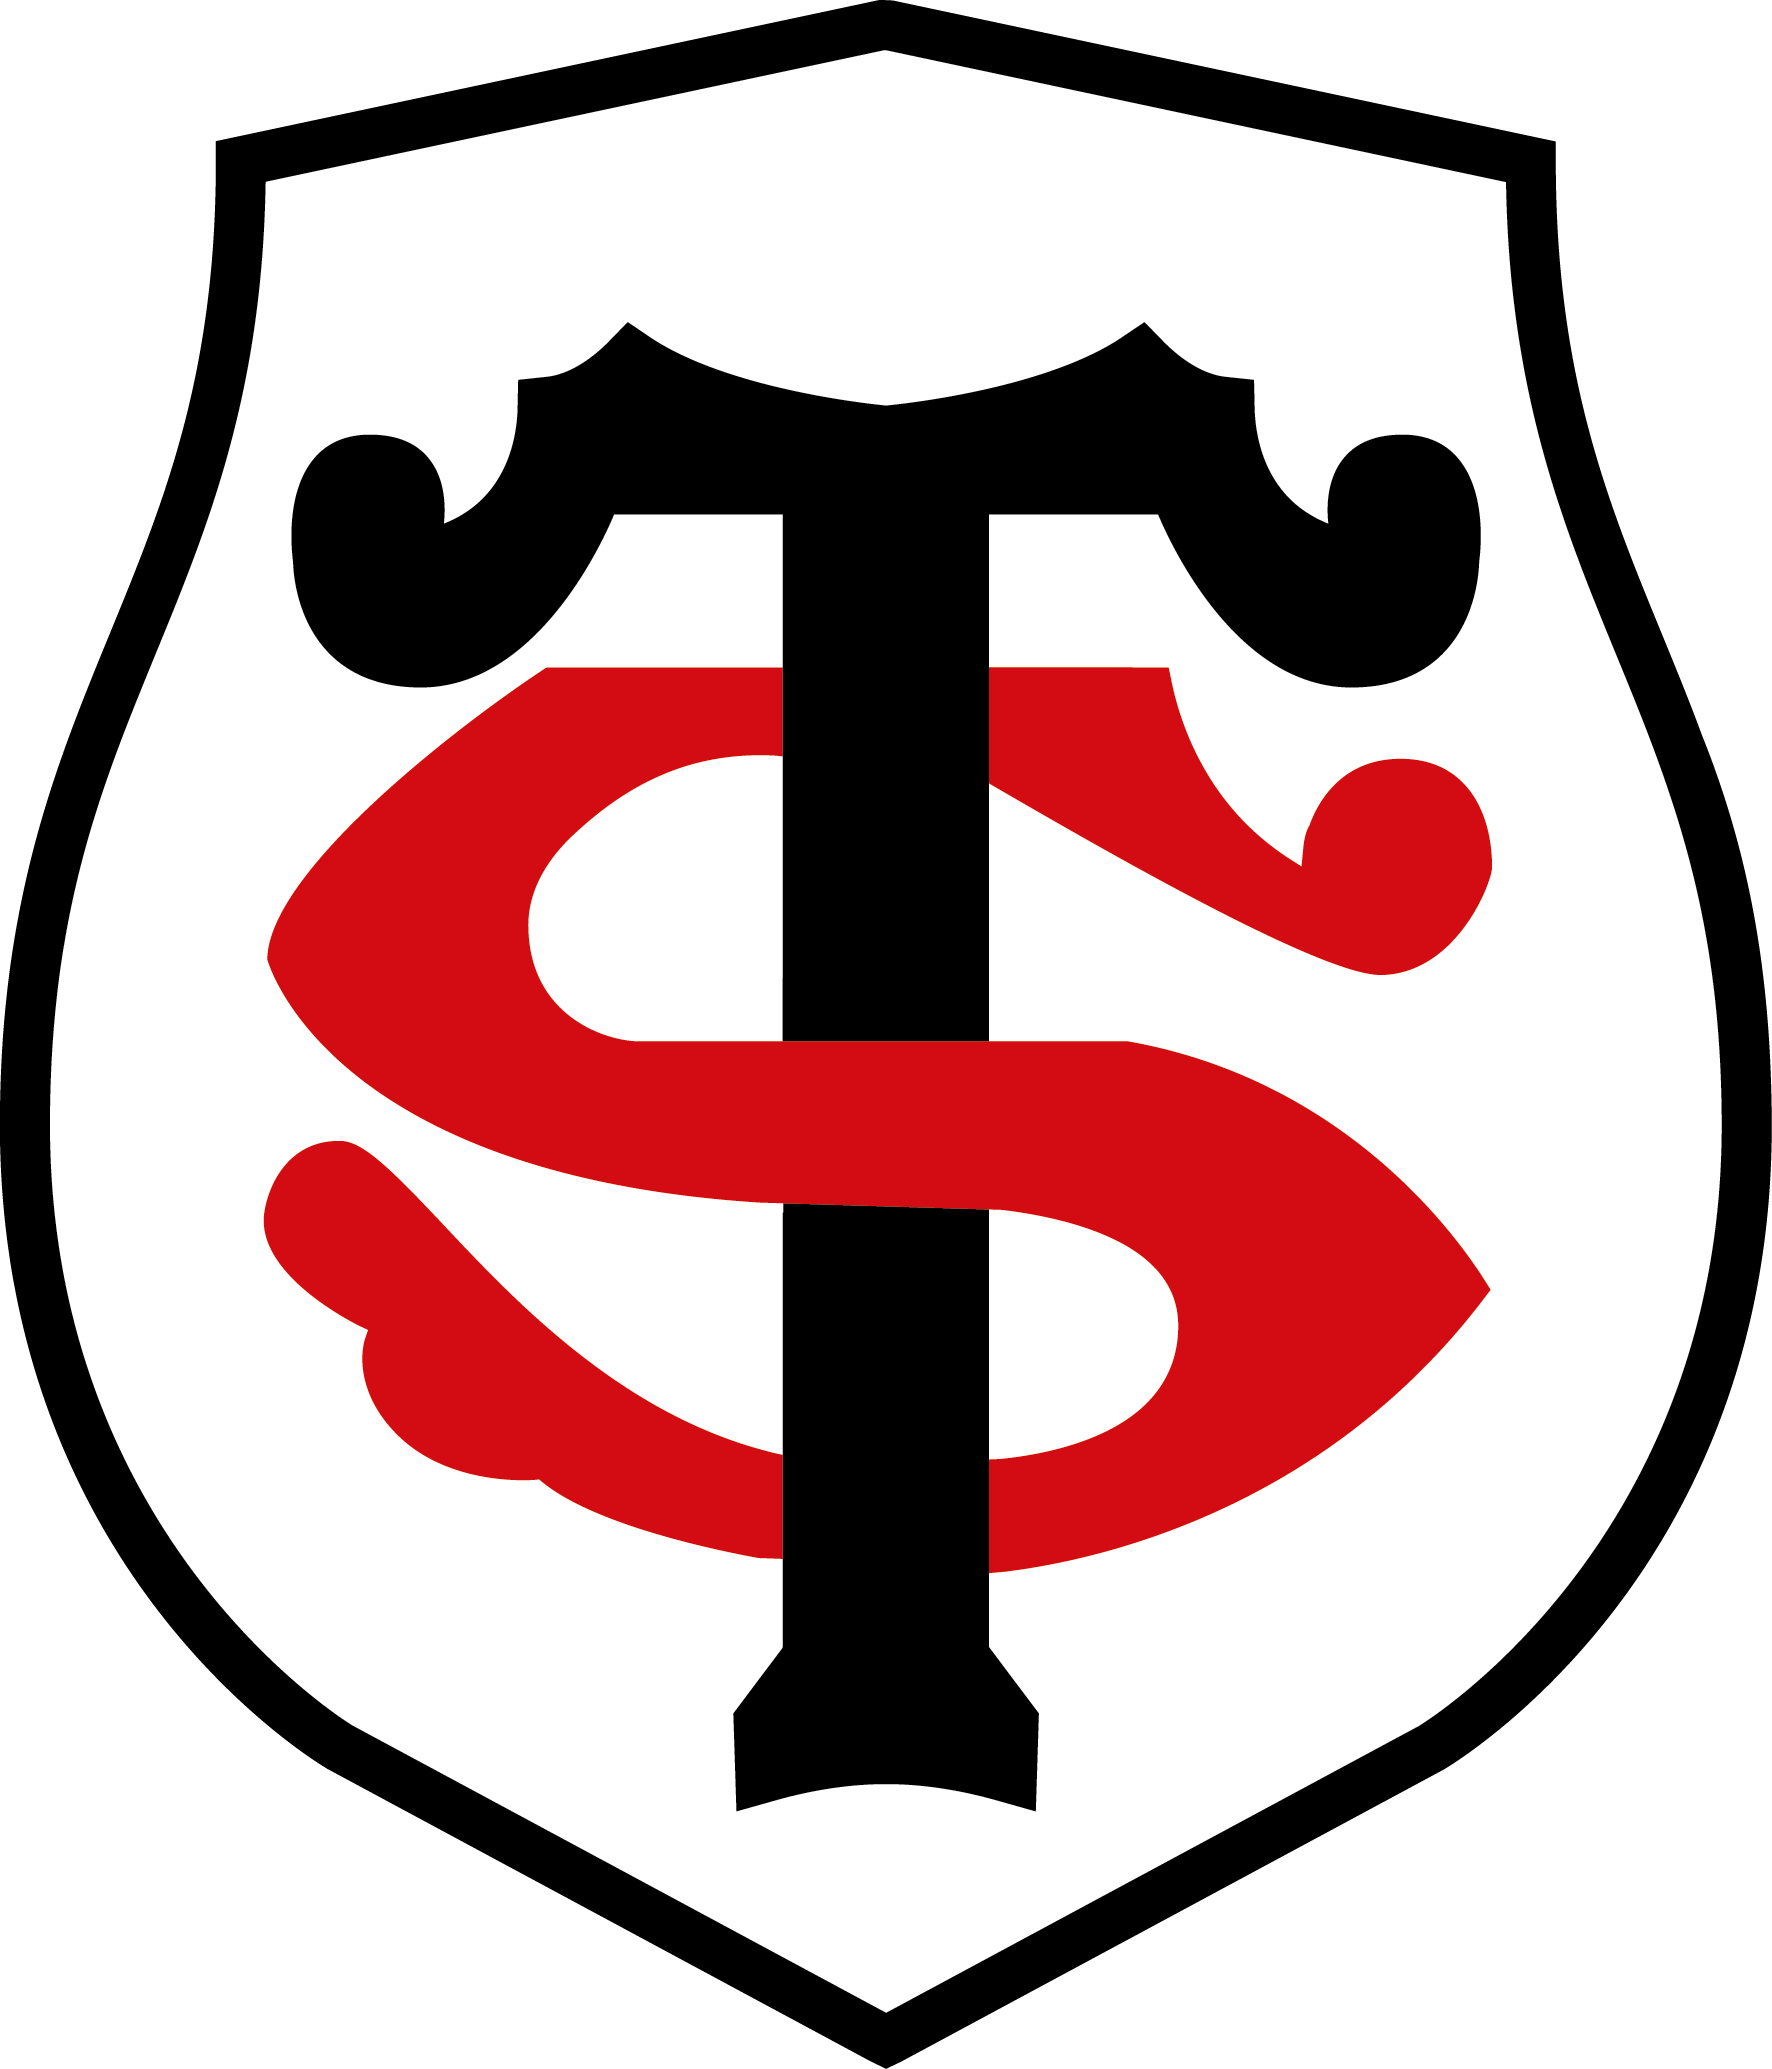 Logo du Stade Toulousain